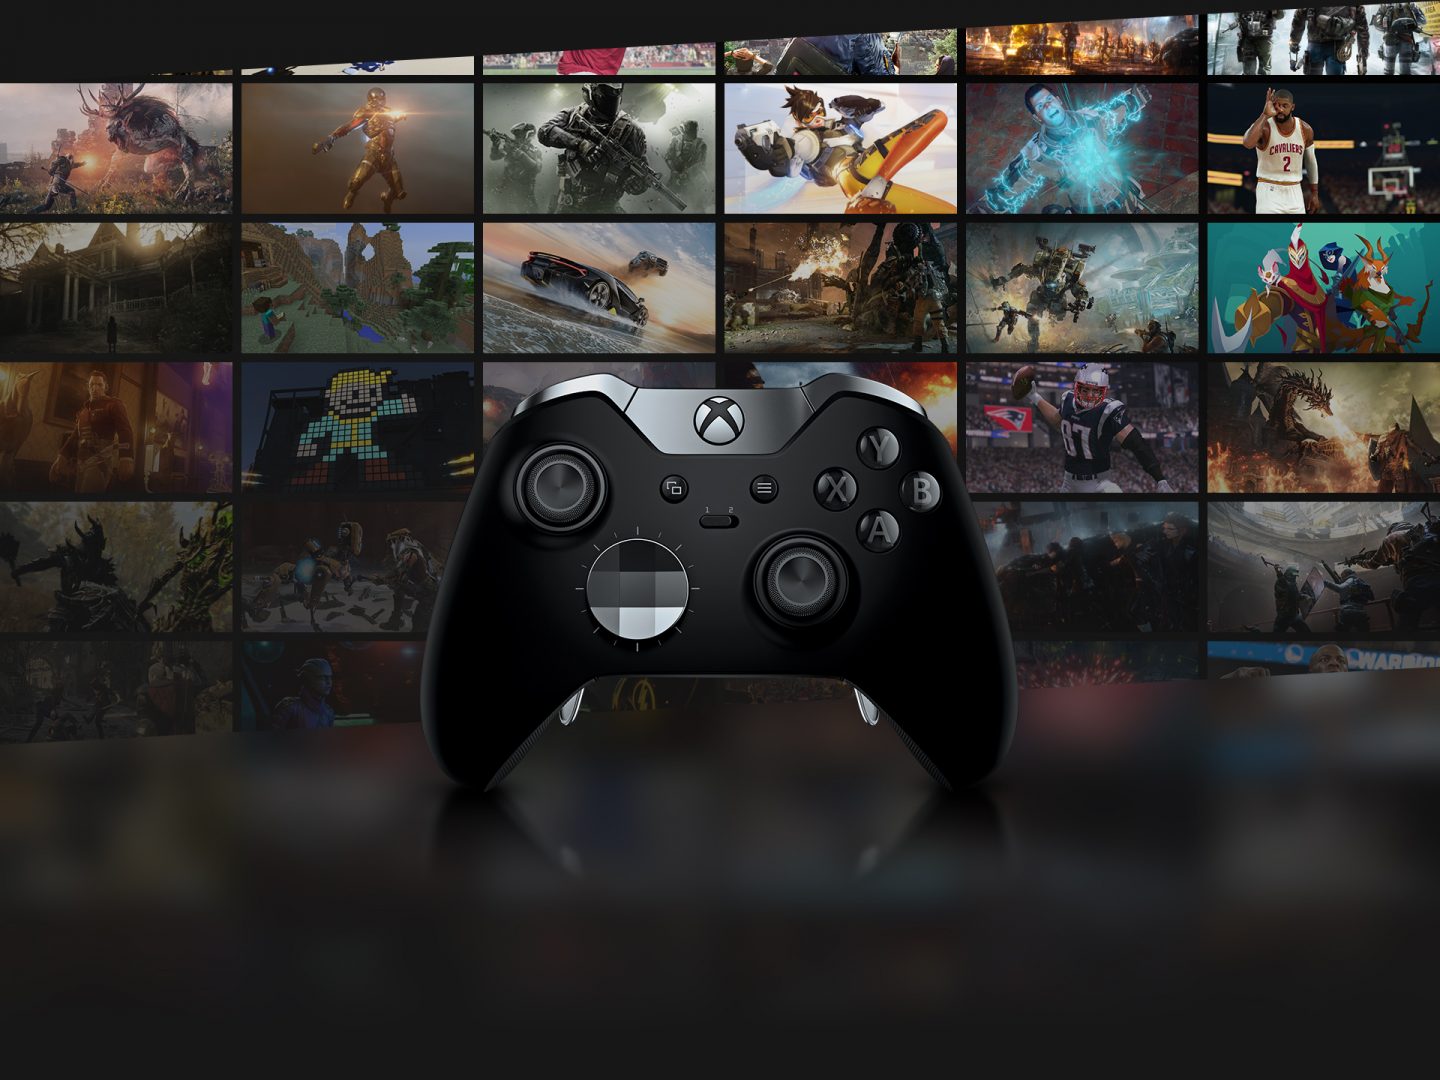 ملخص لكل ما خرجنا به من مؤتمر Xbox ضمن فعاليات معرض E3 2017